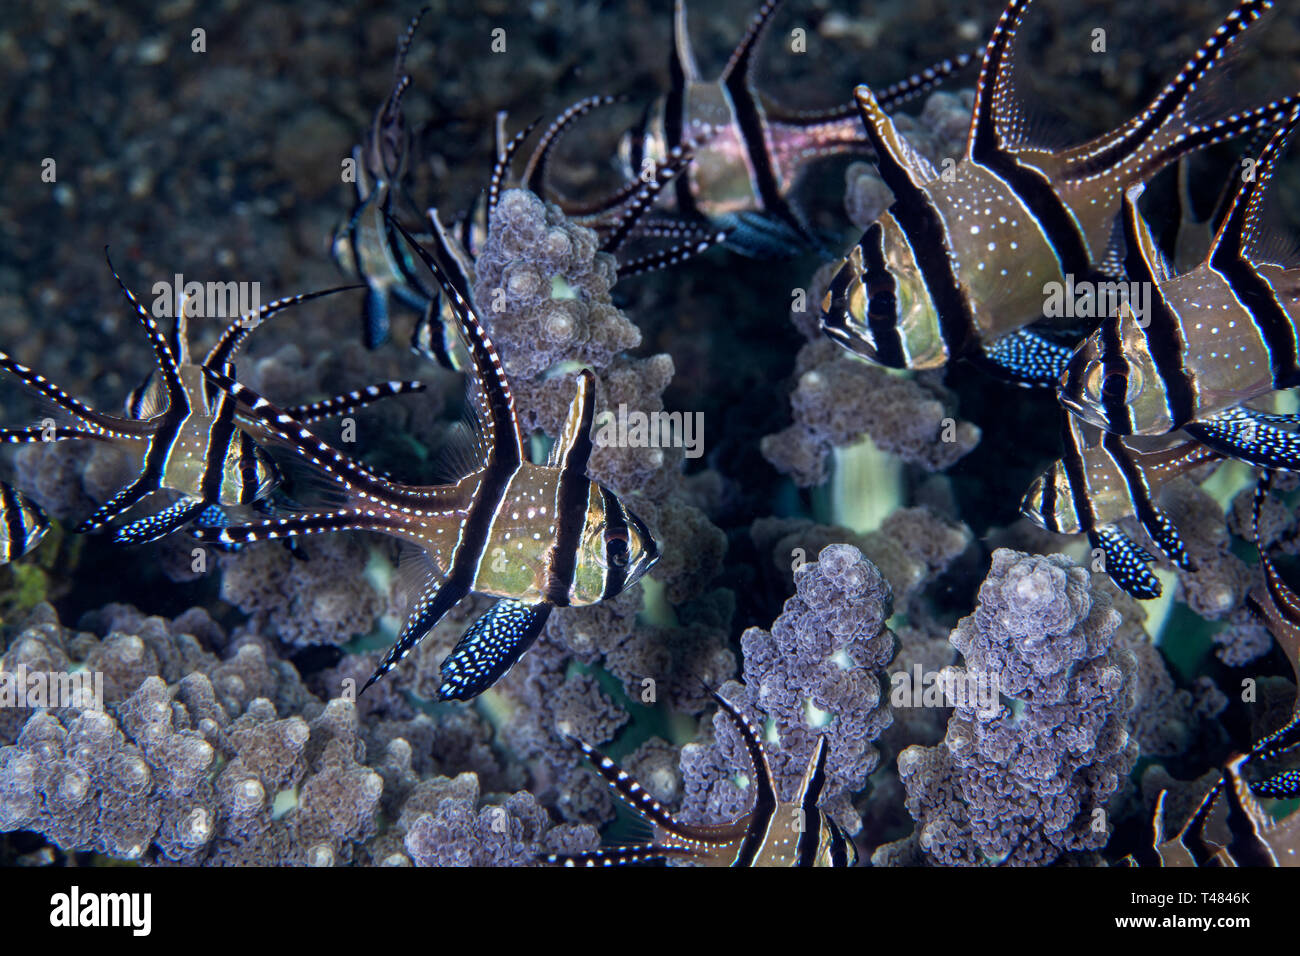 Banggai cardinalfish (Pterapogon kauderni) mit Abzweigung Anemone [Actinodendron glomeratum] verbunden. Lembeh Straits, Indonesien. Stockfoto